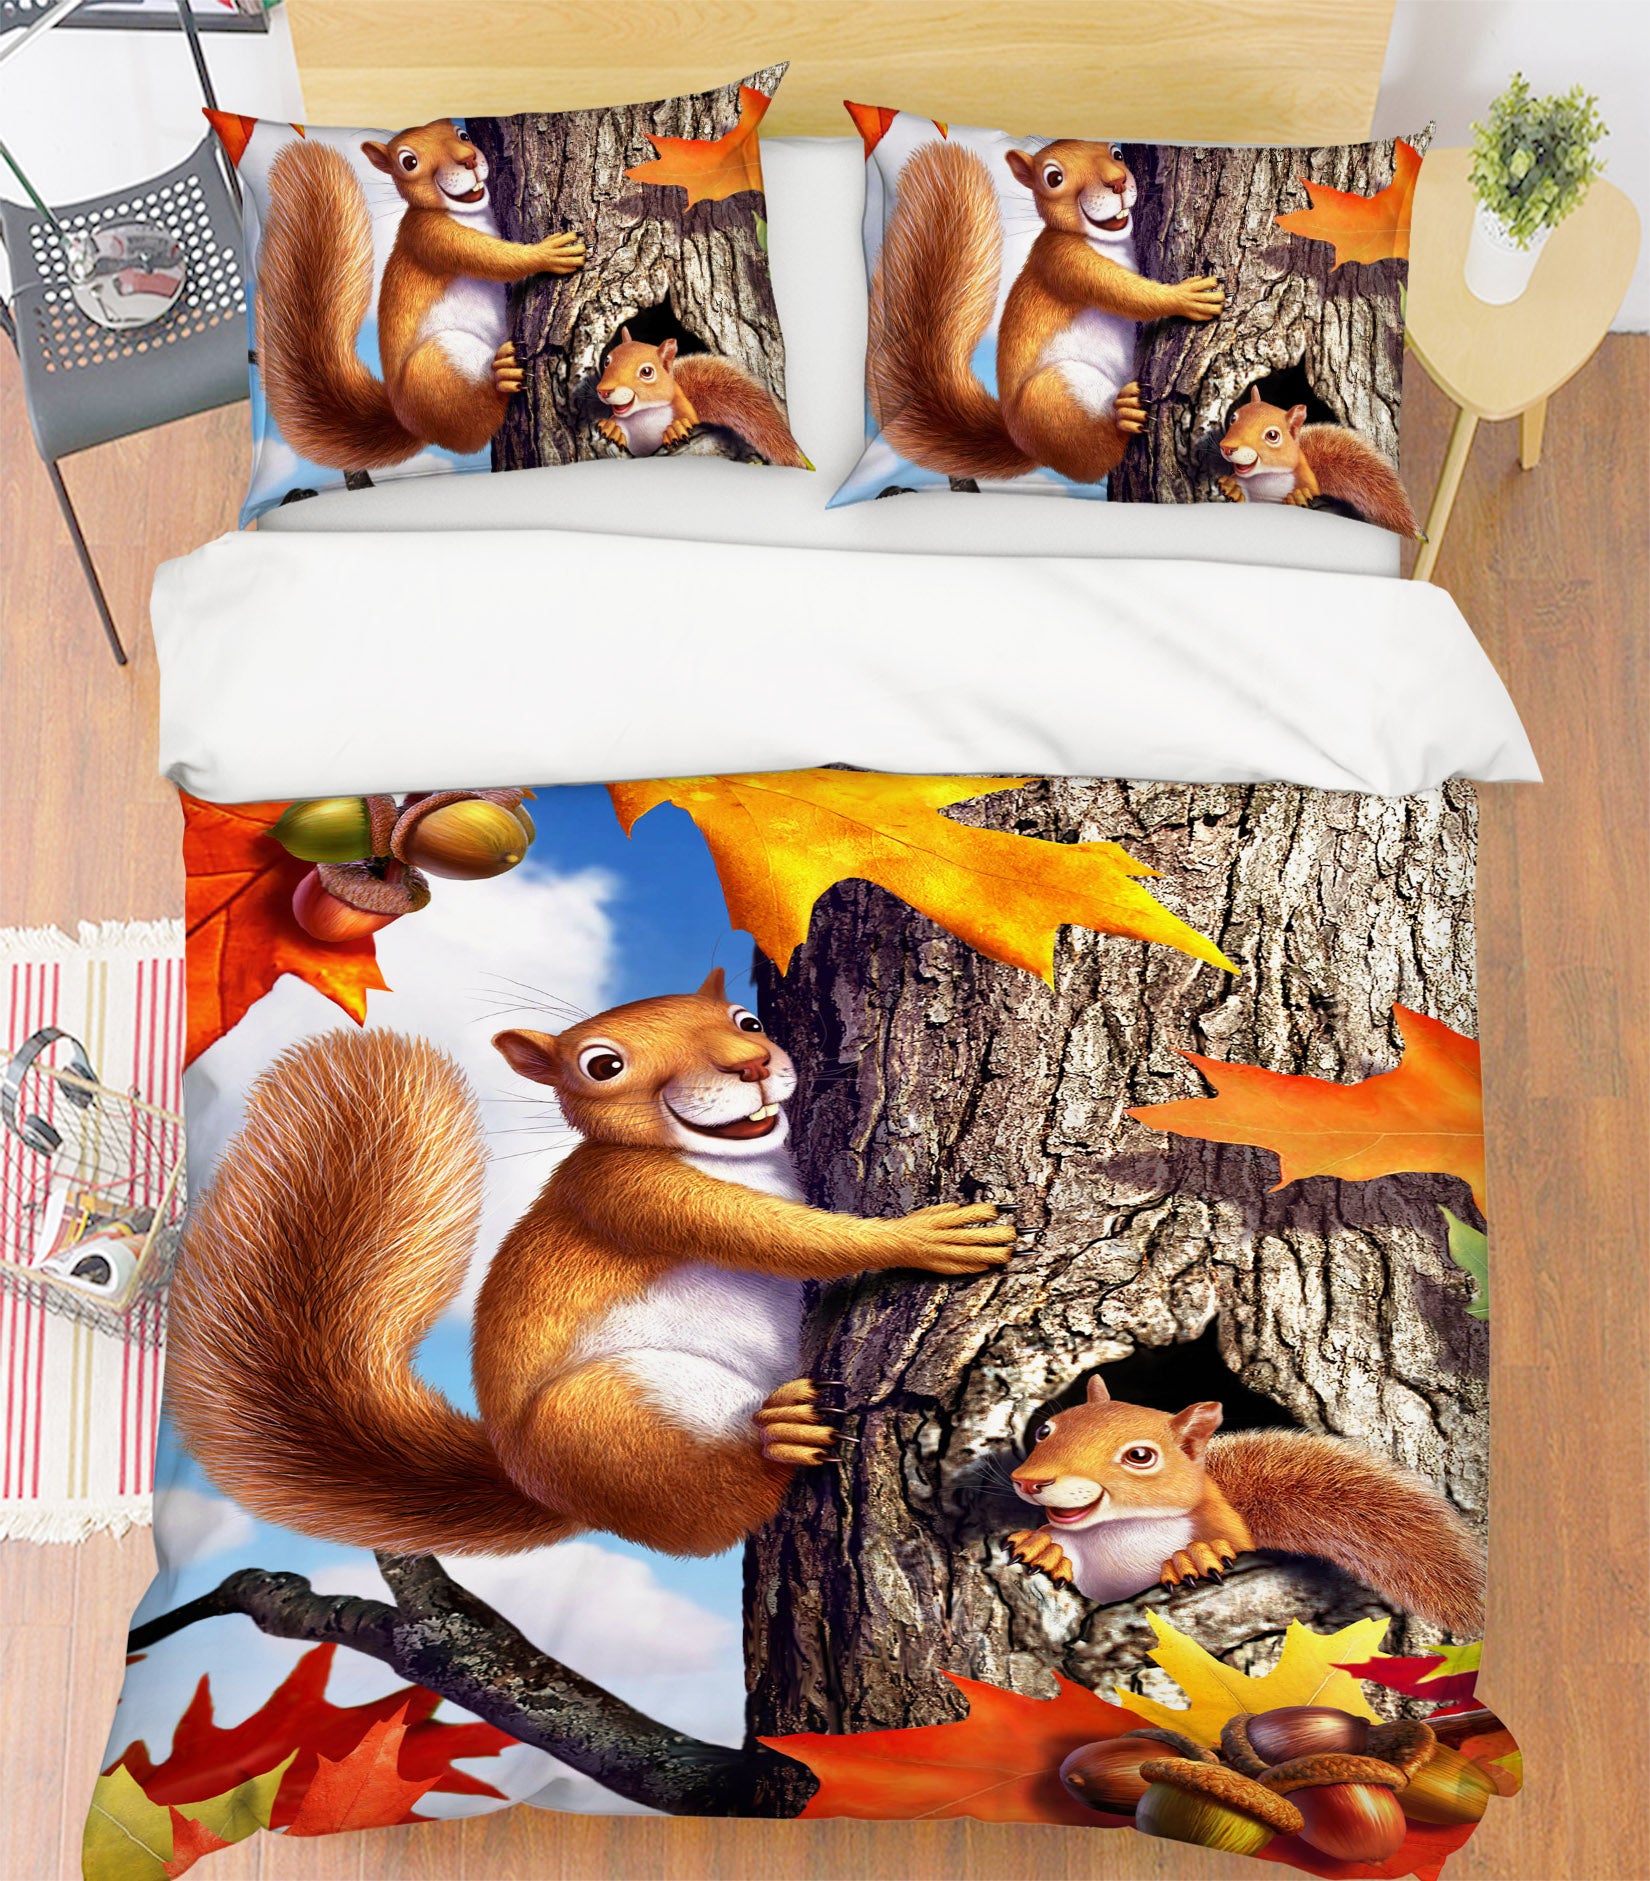 3D Squirrels 86014 Jerry LoFaro bedding Bed Pillowcases Quilt